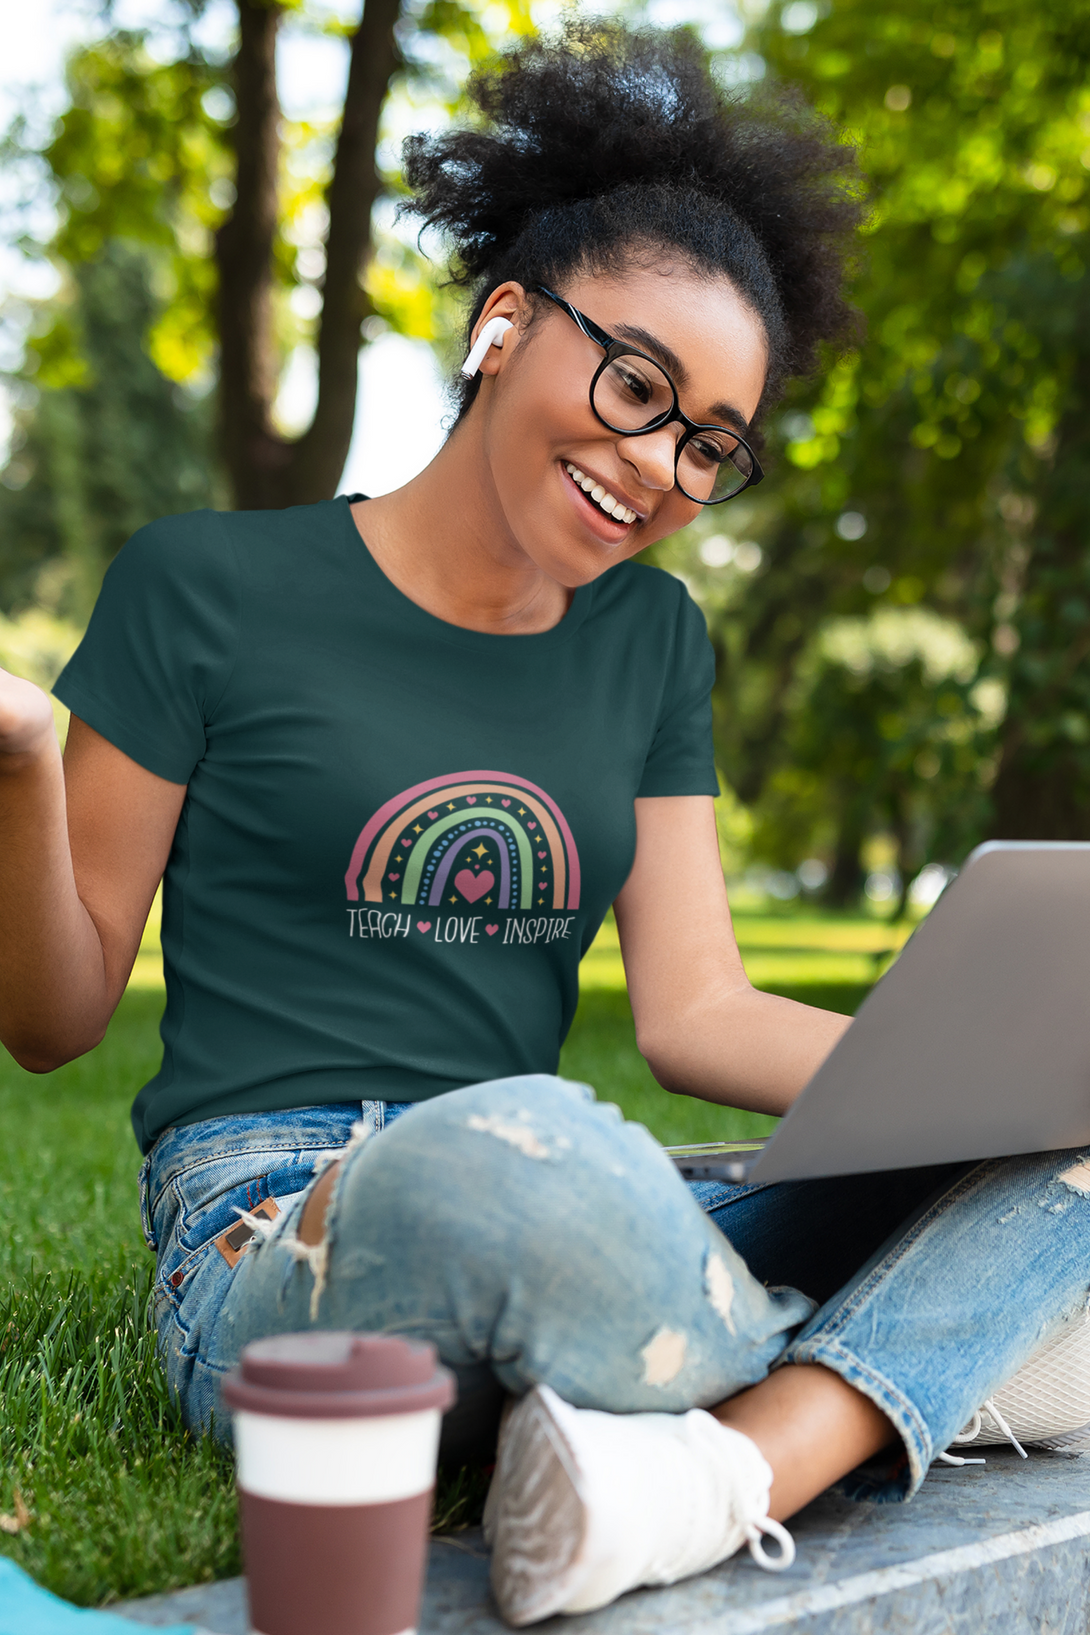 Teach, Love, Inspire Printed T-Shirt For Women - WowWaves - 3